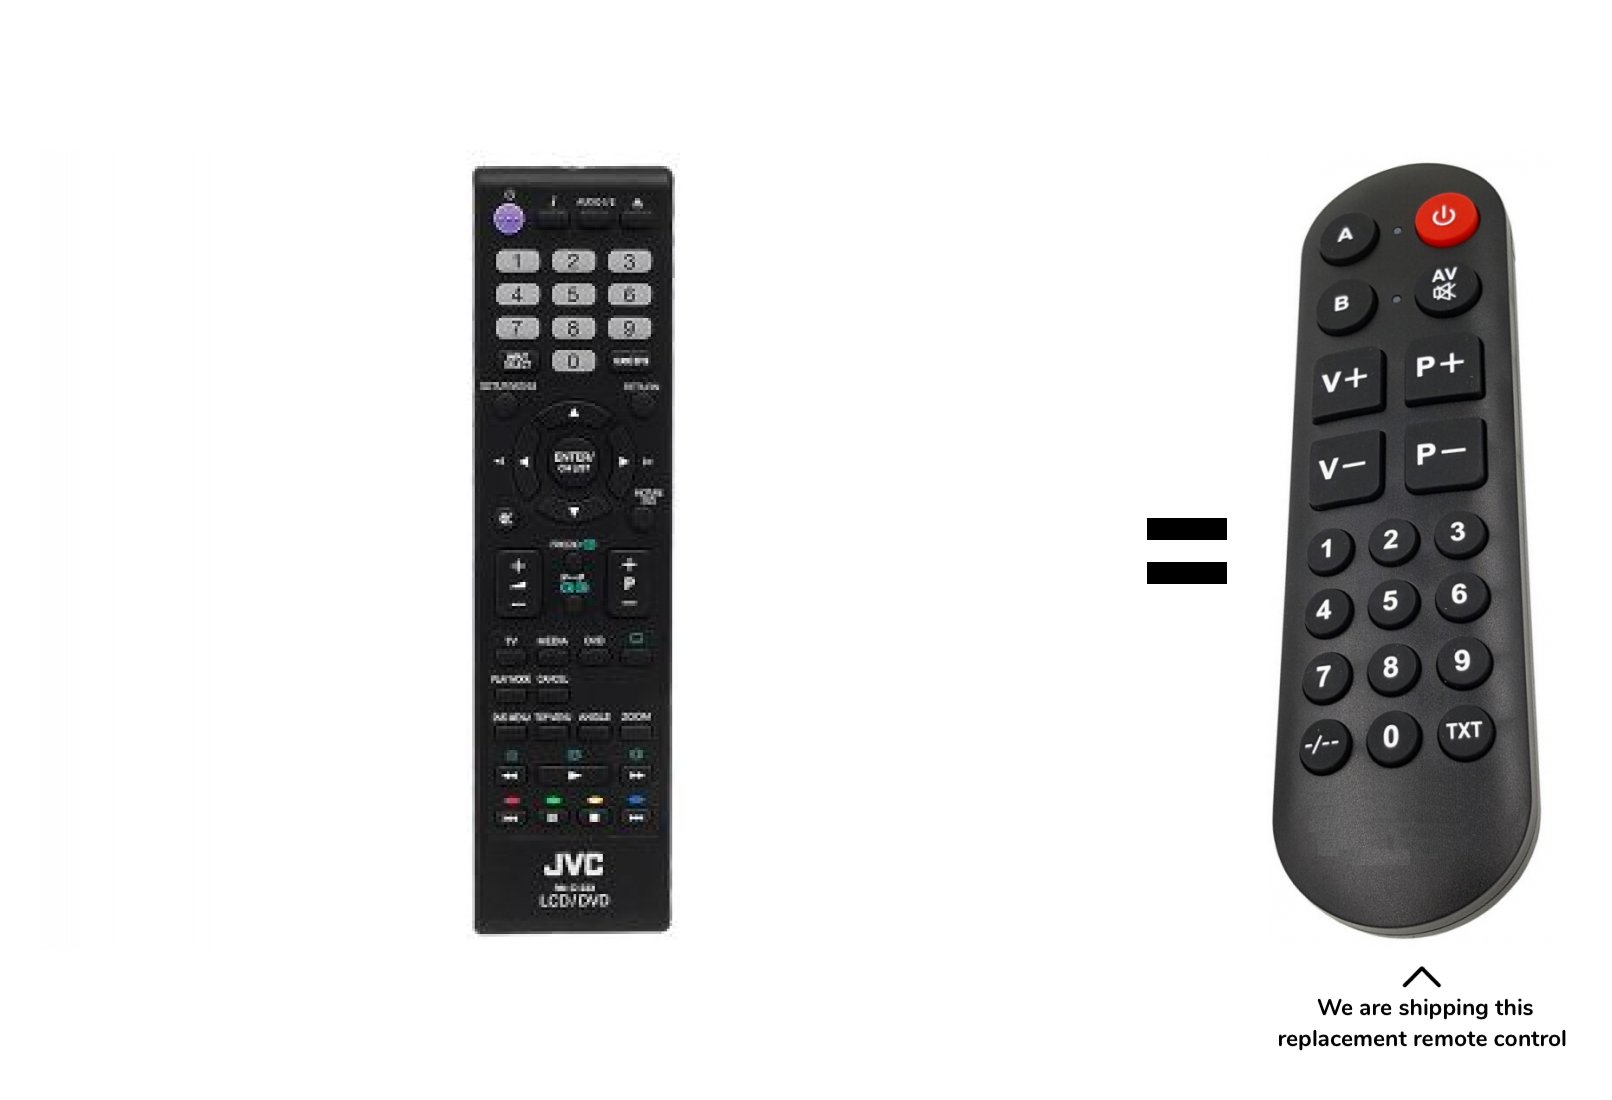 JVC RM-C1233 remote control for seniors